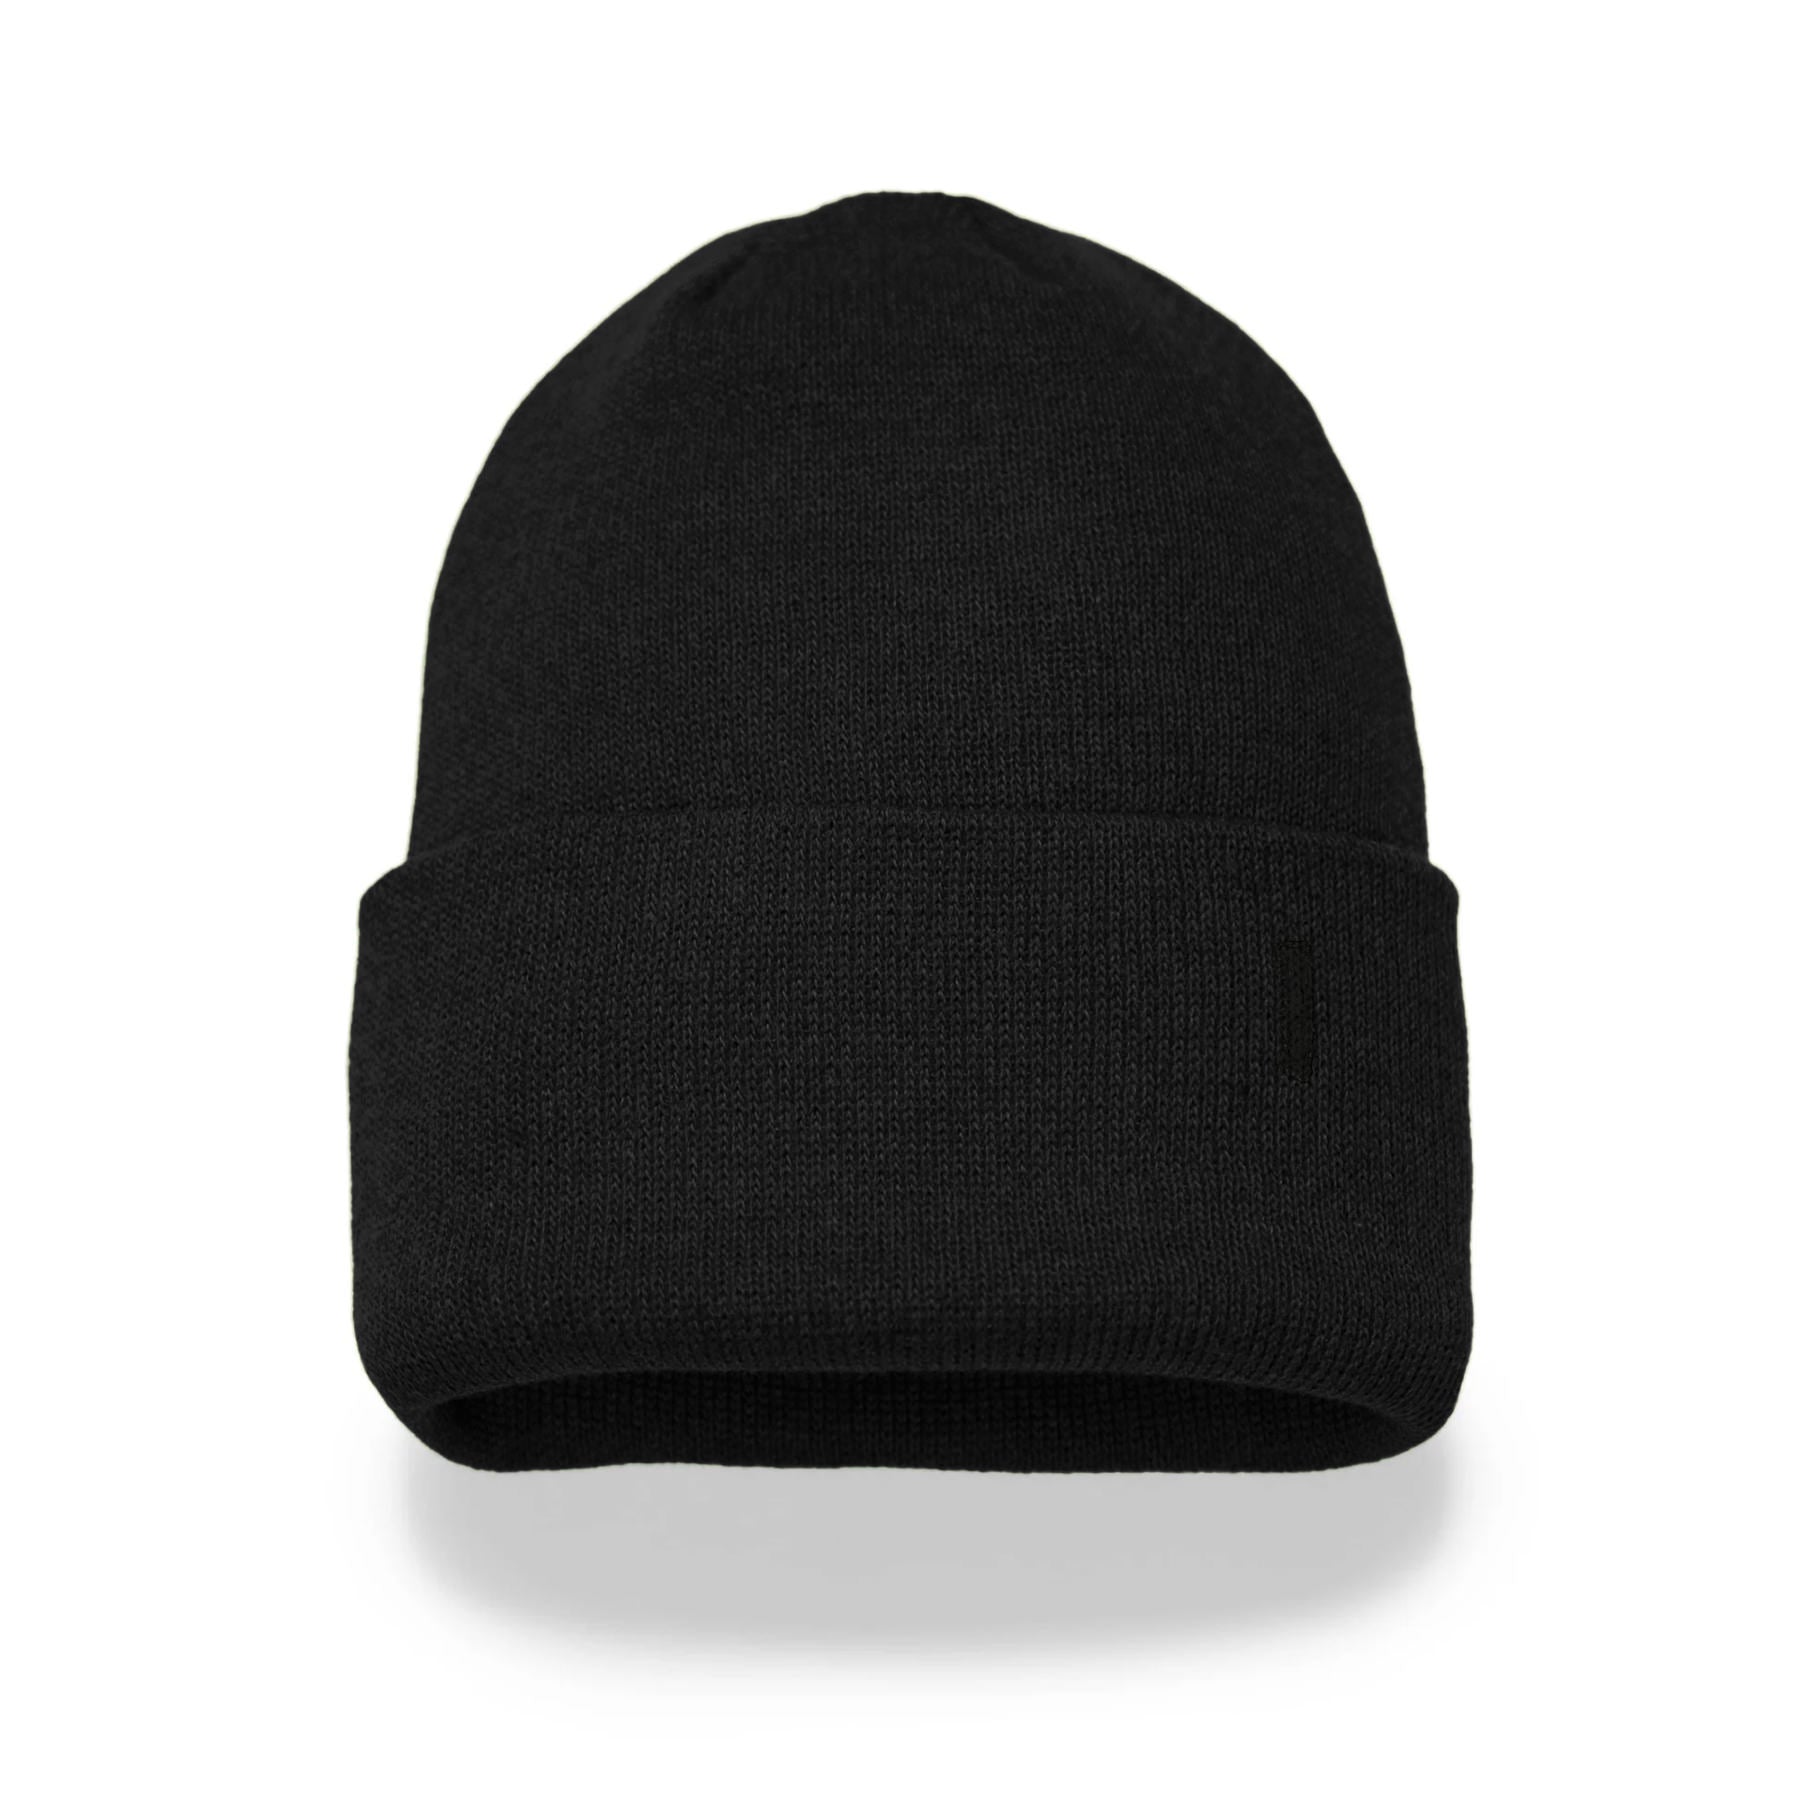 Black knit beanie-style hat on white background